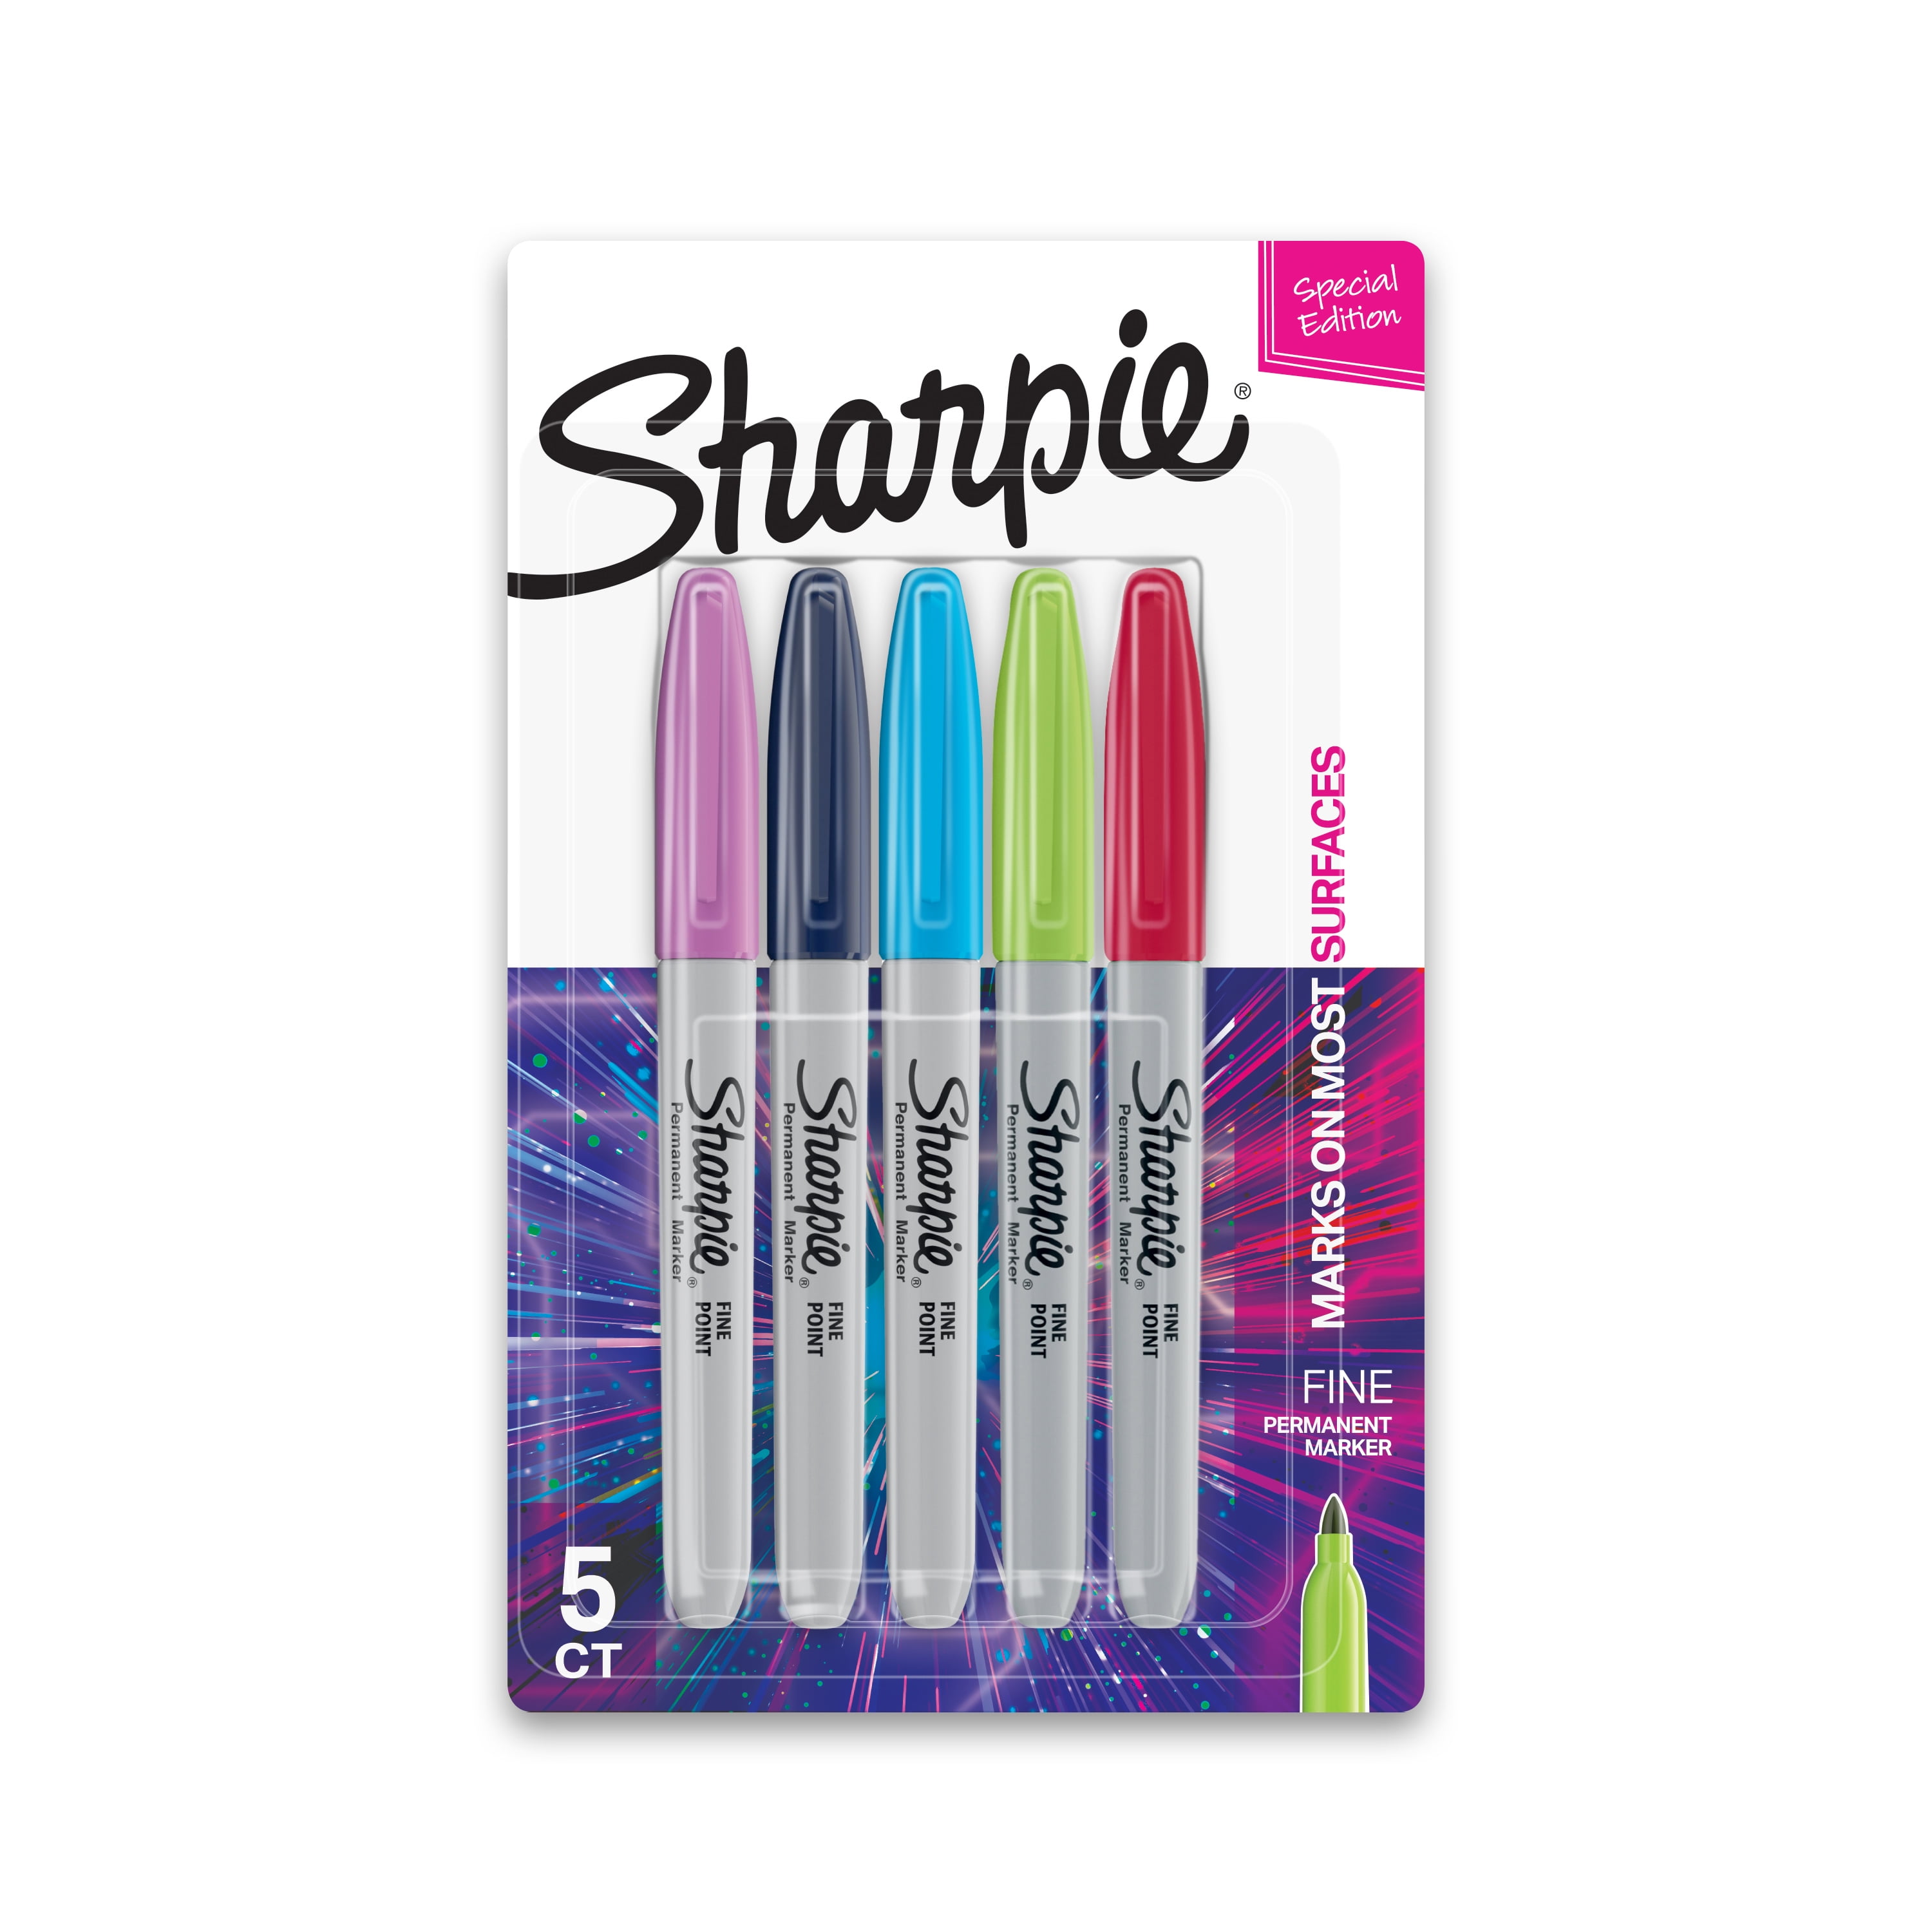 Sharpie Color Burst Ultra Fine Permanent Markers, Assorted Colors, 24 Count